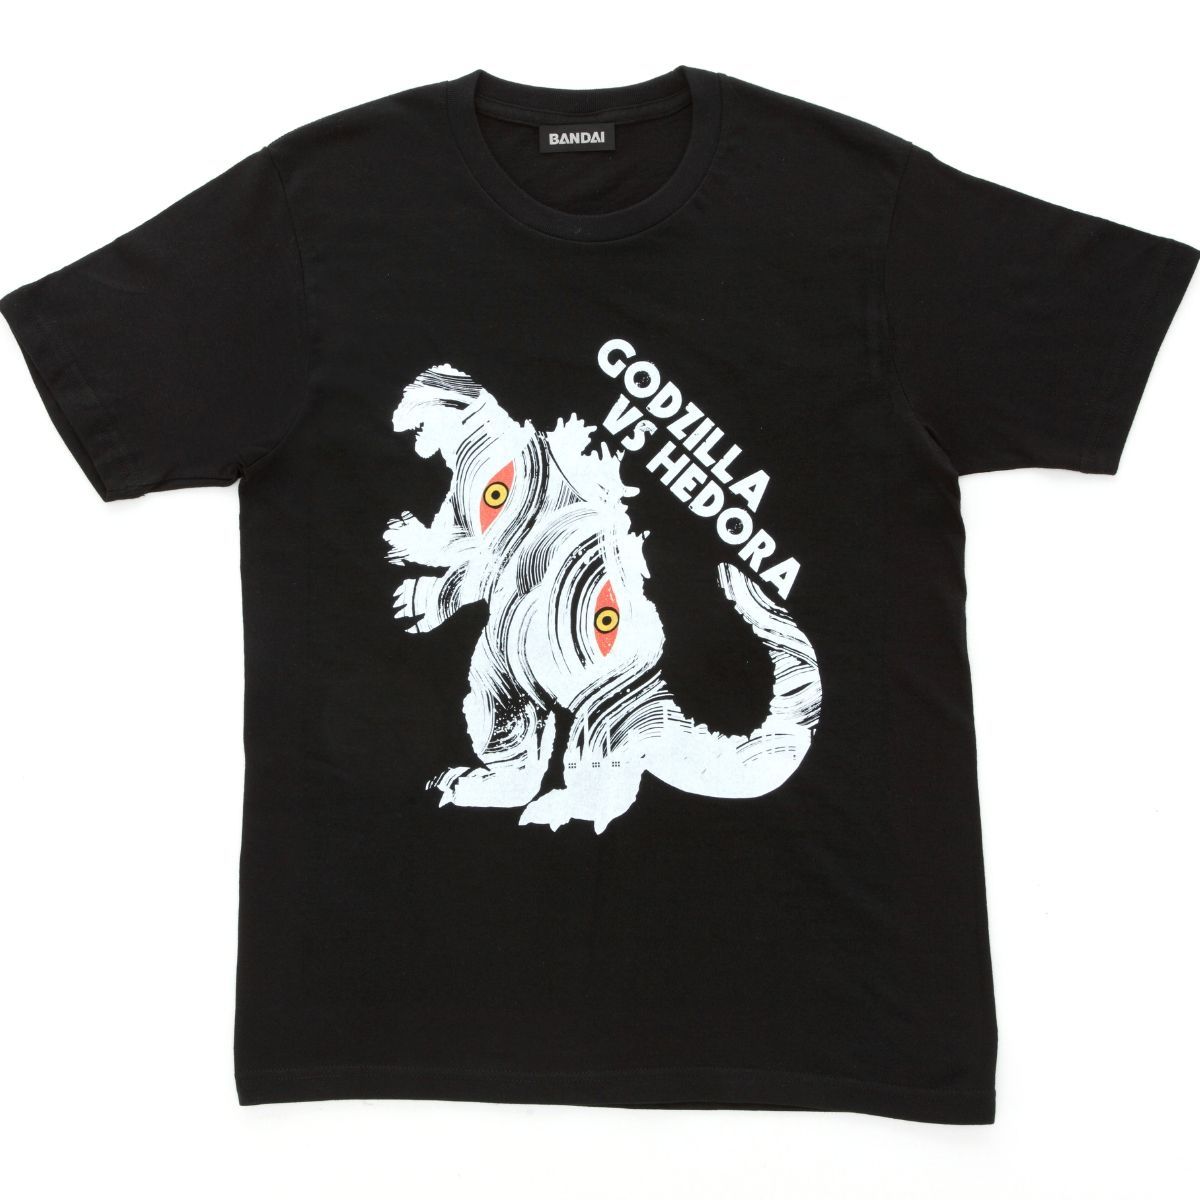 Godzilla 65th Anniversary Movie Poster T-shirt - Godzilla vs. Hedorah ver.